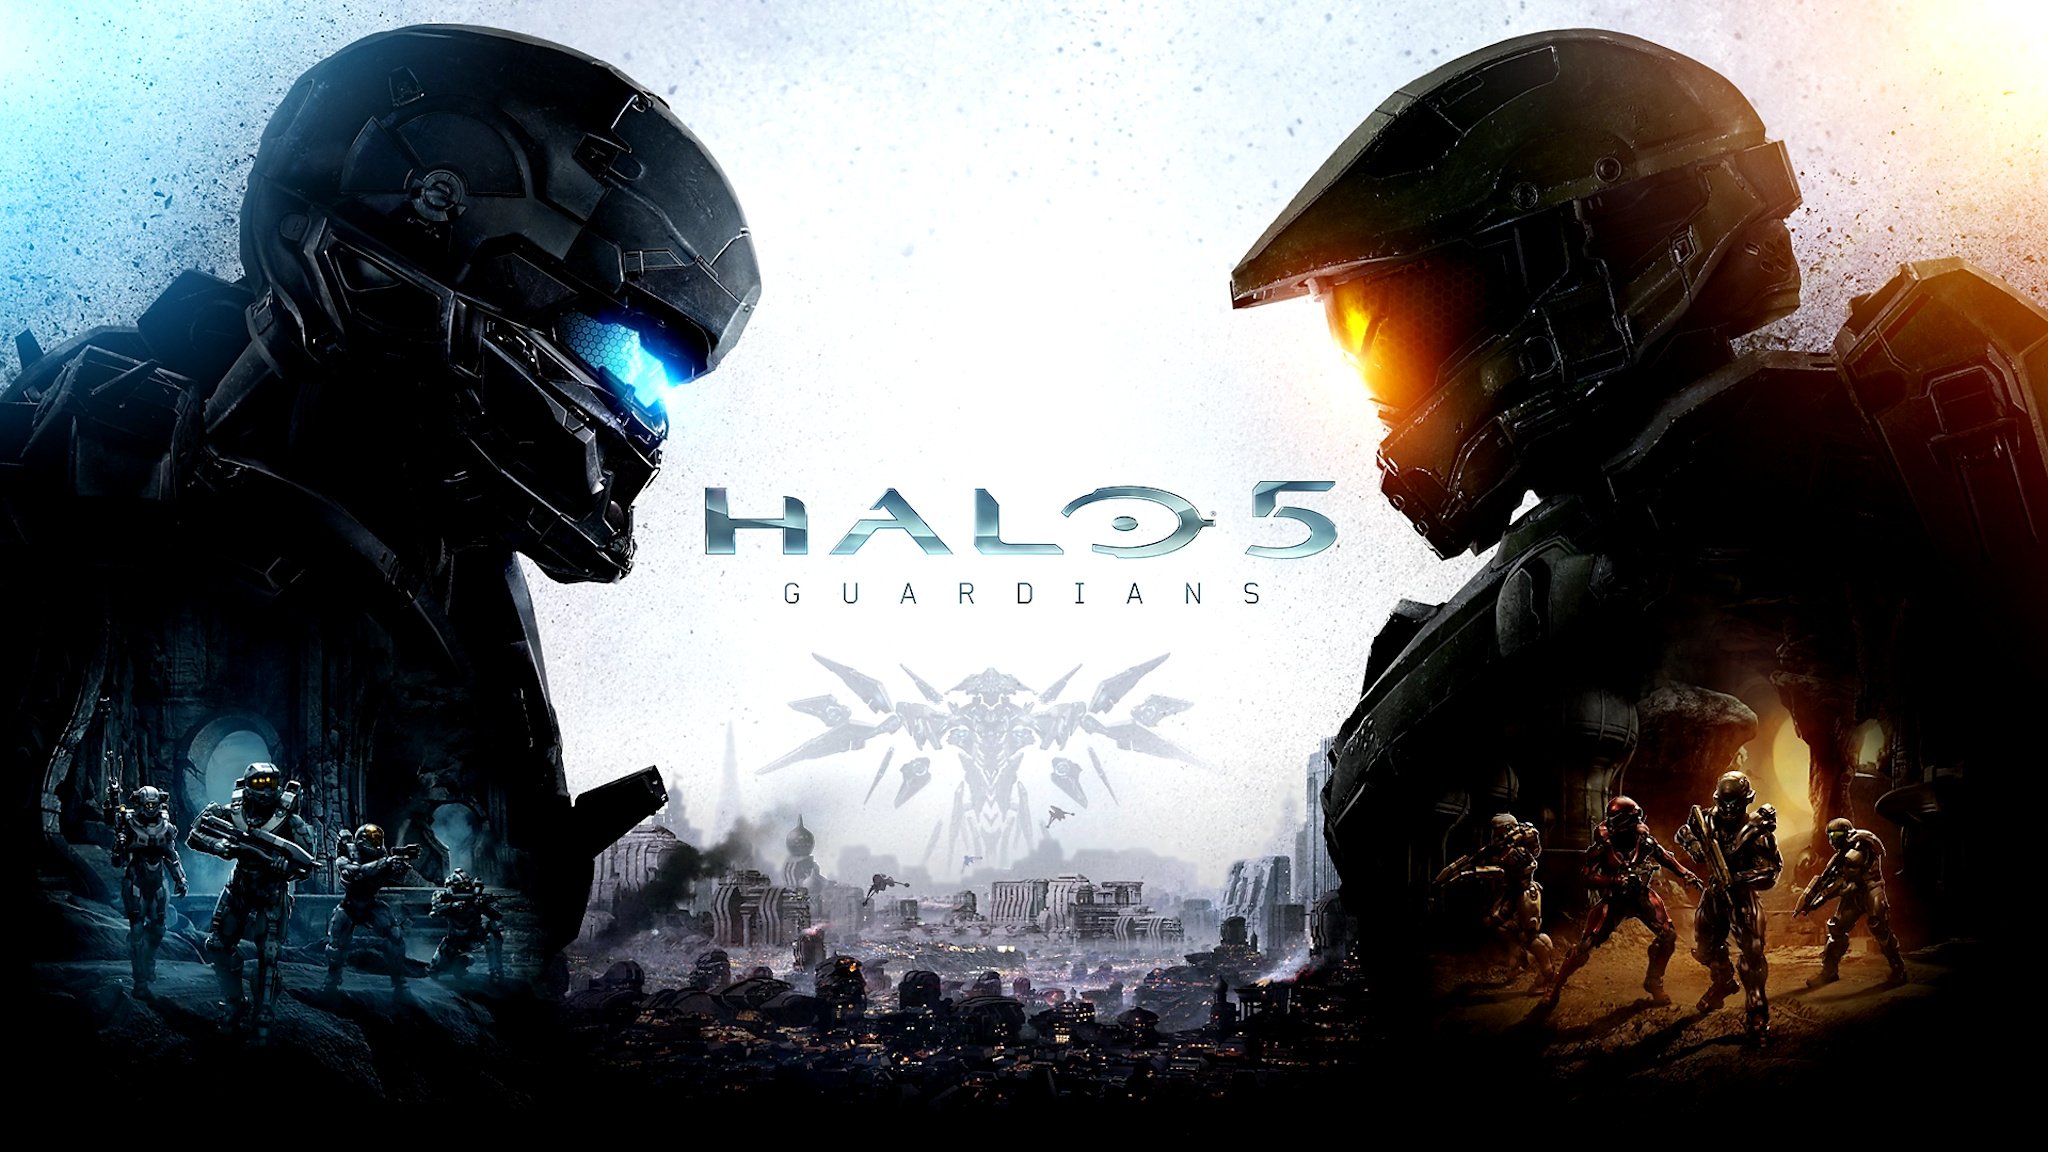 Halo 5: Guardians review: An old friend - CNET